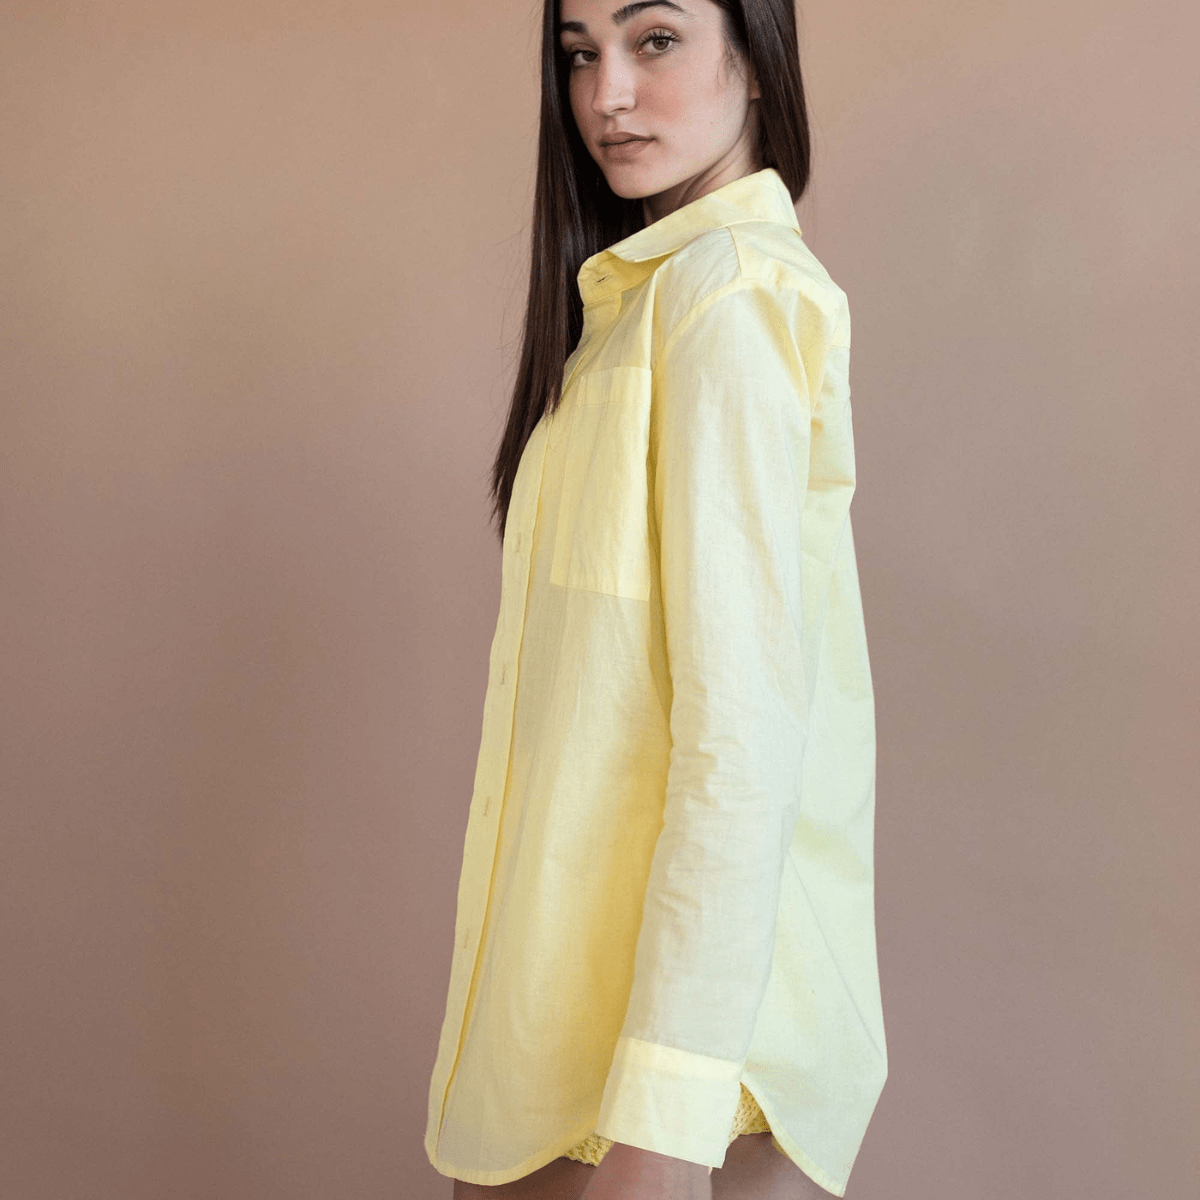 Yellow Pastel Long Sleeve Button Down Shirt